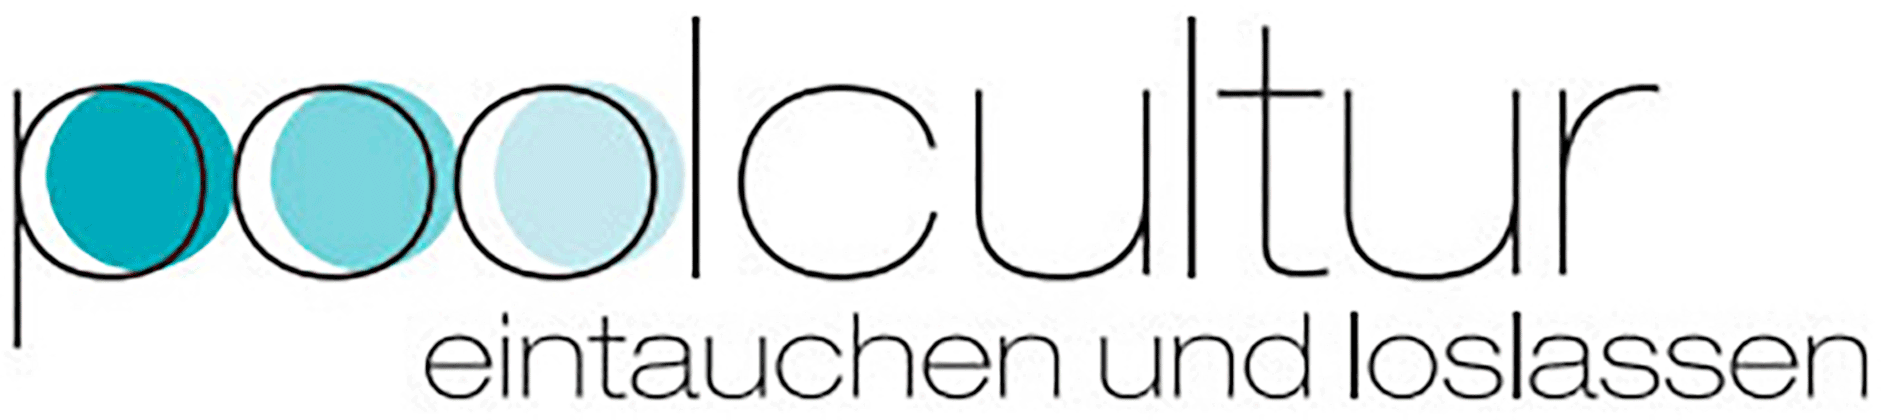 Logo professioneller Poolbauer poolcultur GmbH